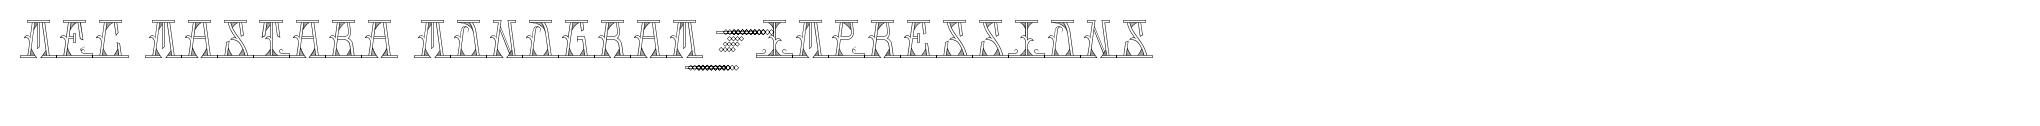 MFC Mastaba Monogram 10000 Impressions image